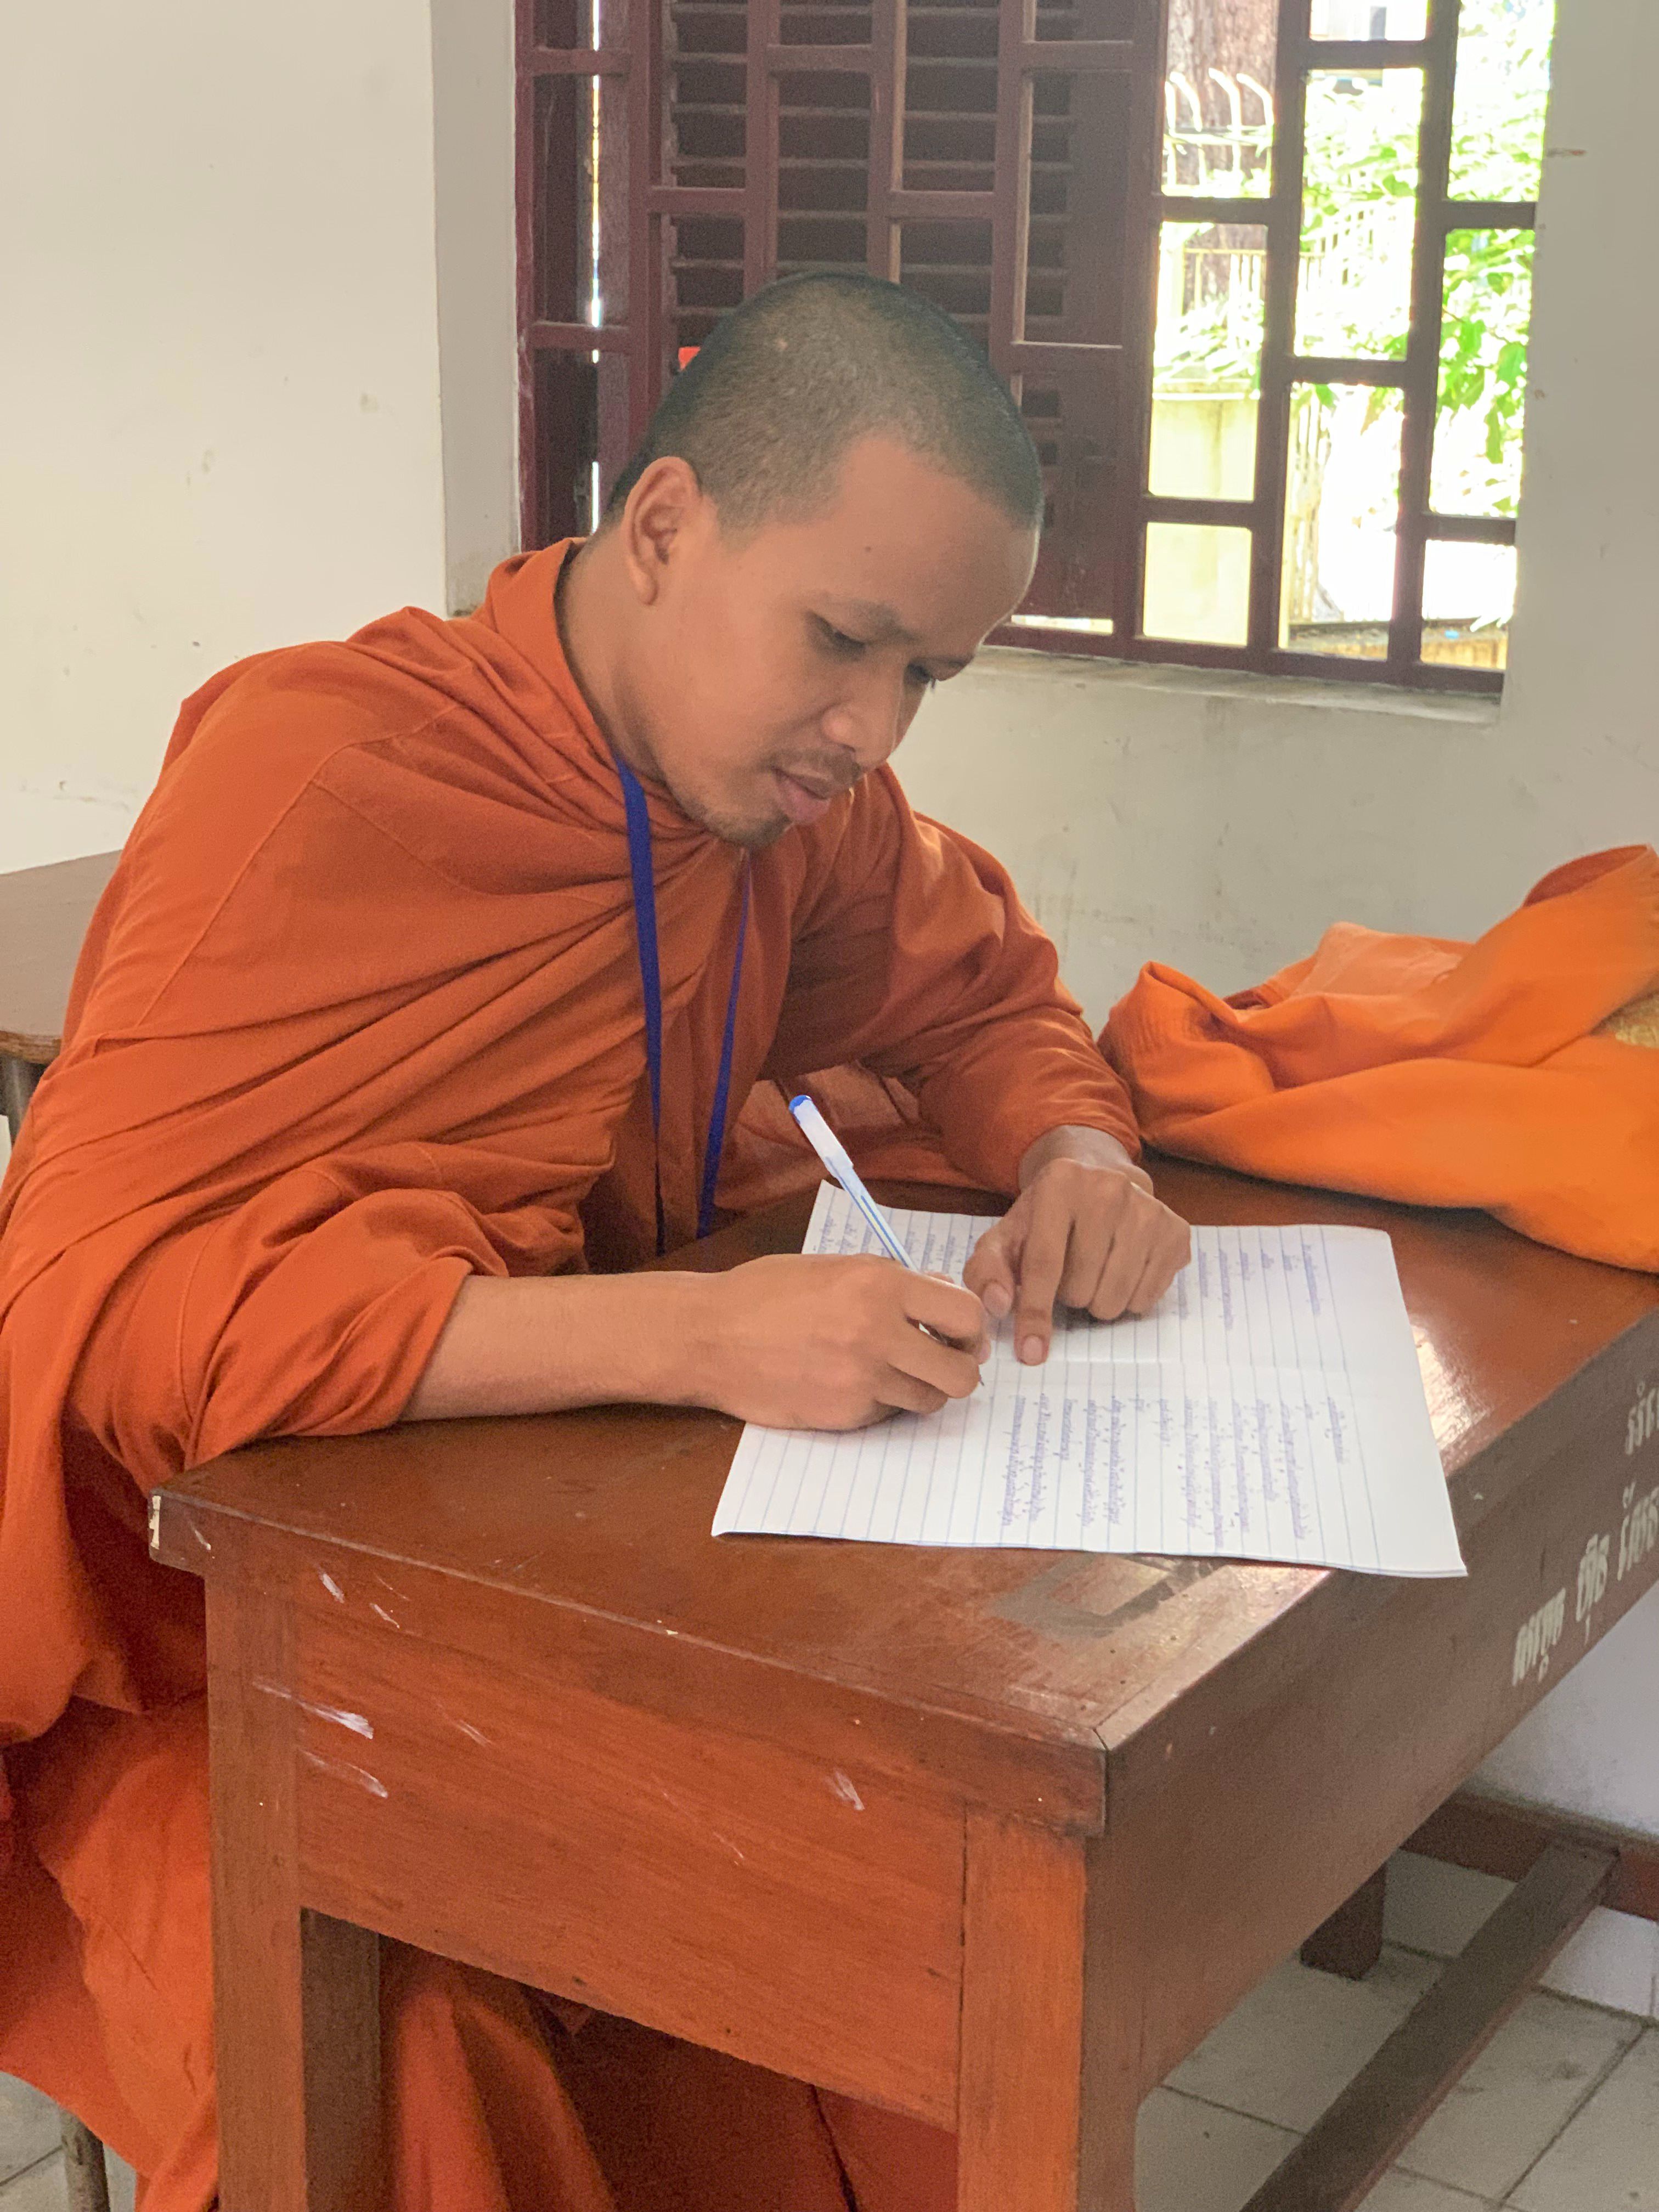 The photo taken in September 2019 shows Ven. Sarien Sib taking an exam at Preah Sihanouk Raja Buddhist University, Phnom Penh, Cambodia. Photo provided by Ven. Sarien Sib. 